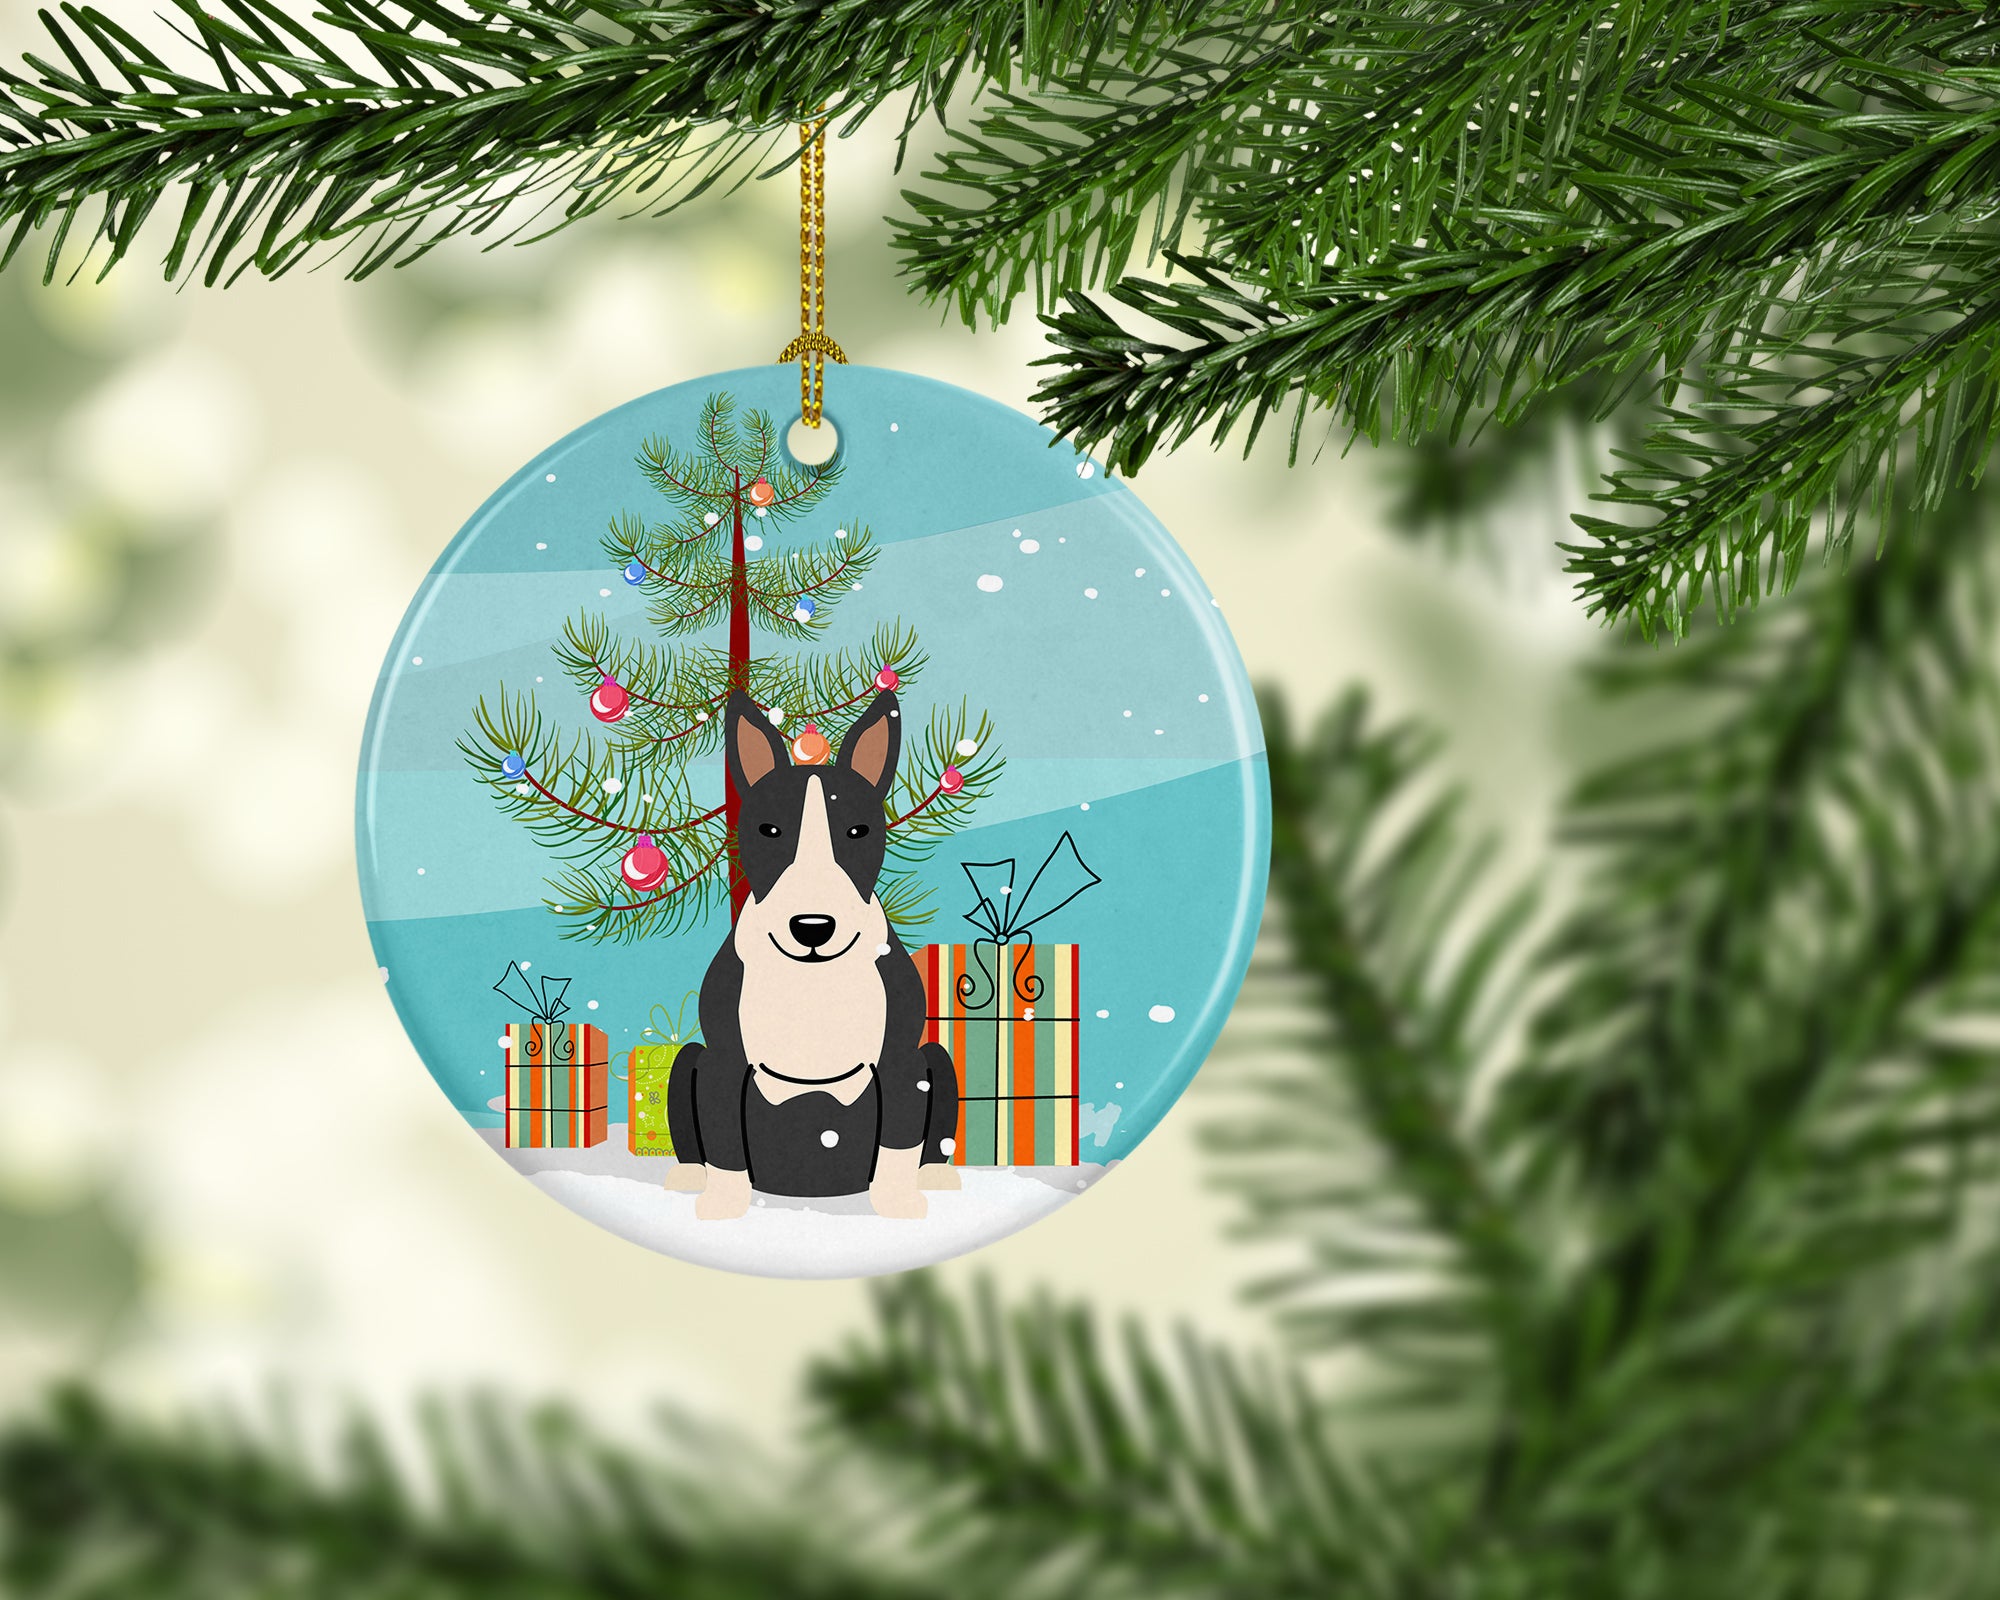 Merry Christmas Tree Bull Terrier Black White Ceramic Ornament BB4258CO1 - the-store.com